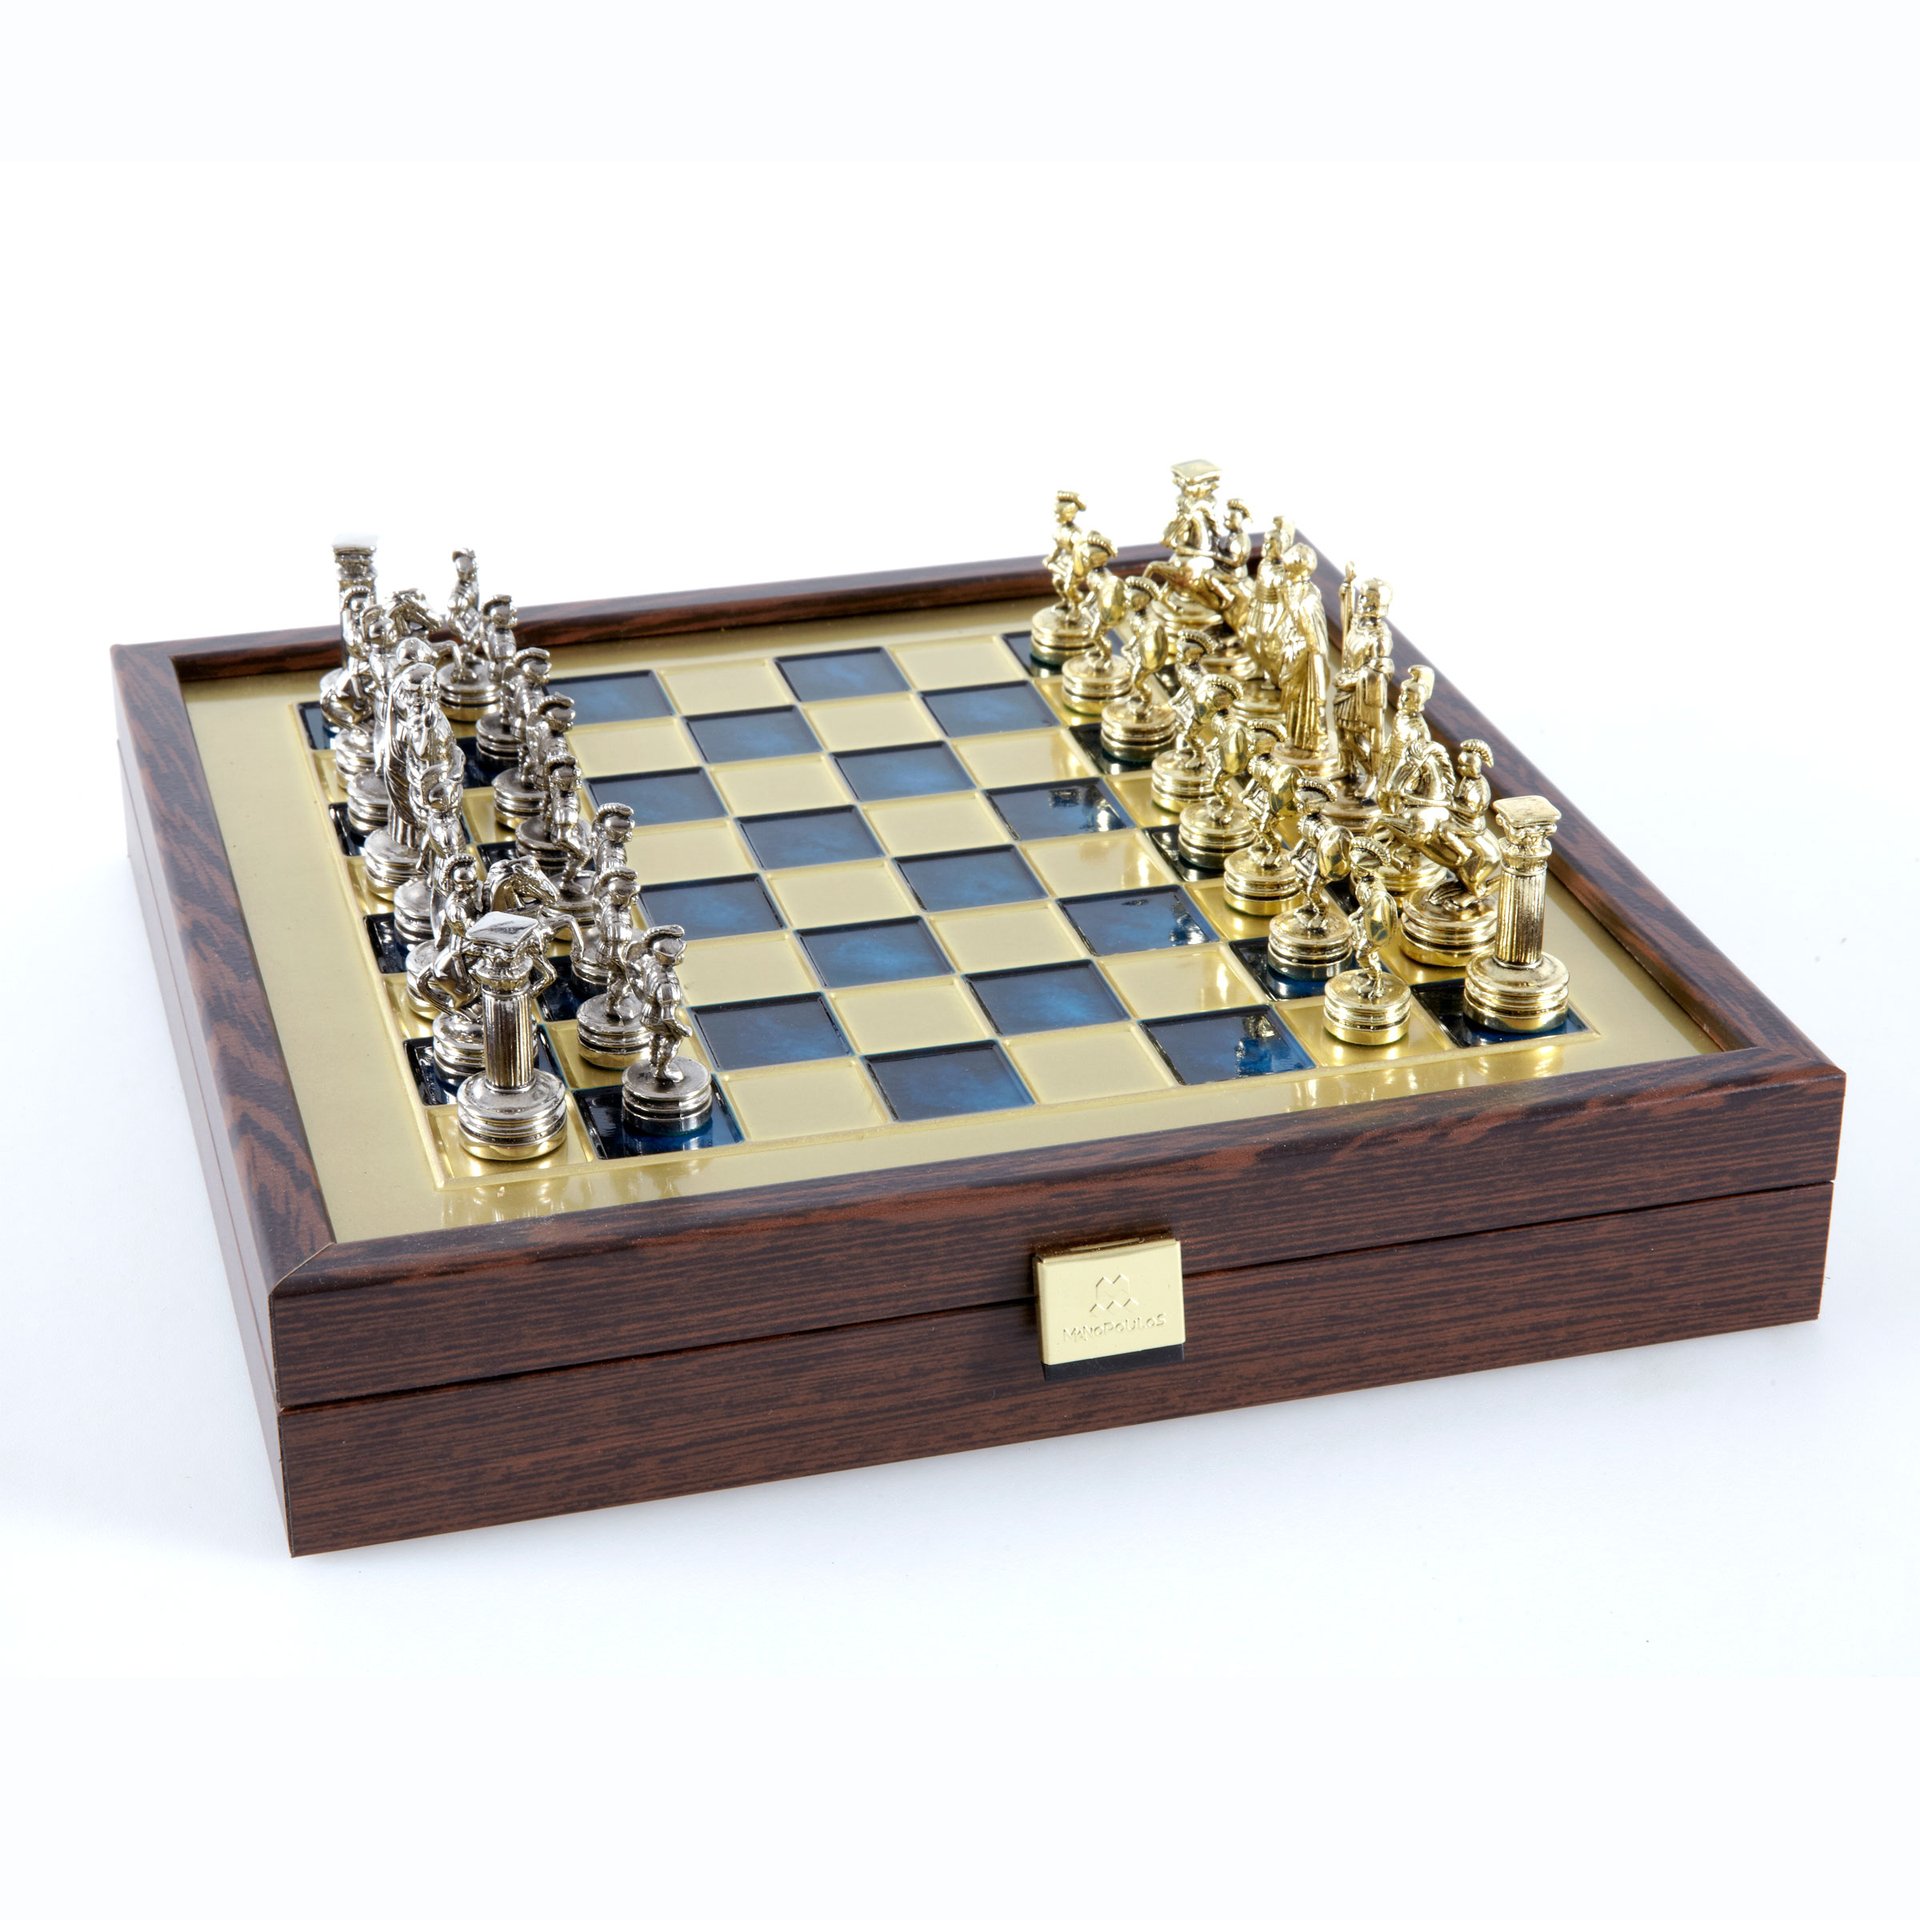 Chess Set - Greek Roman Period - Gold -Silver Chessmen - Green Chessboard